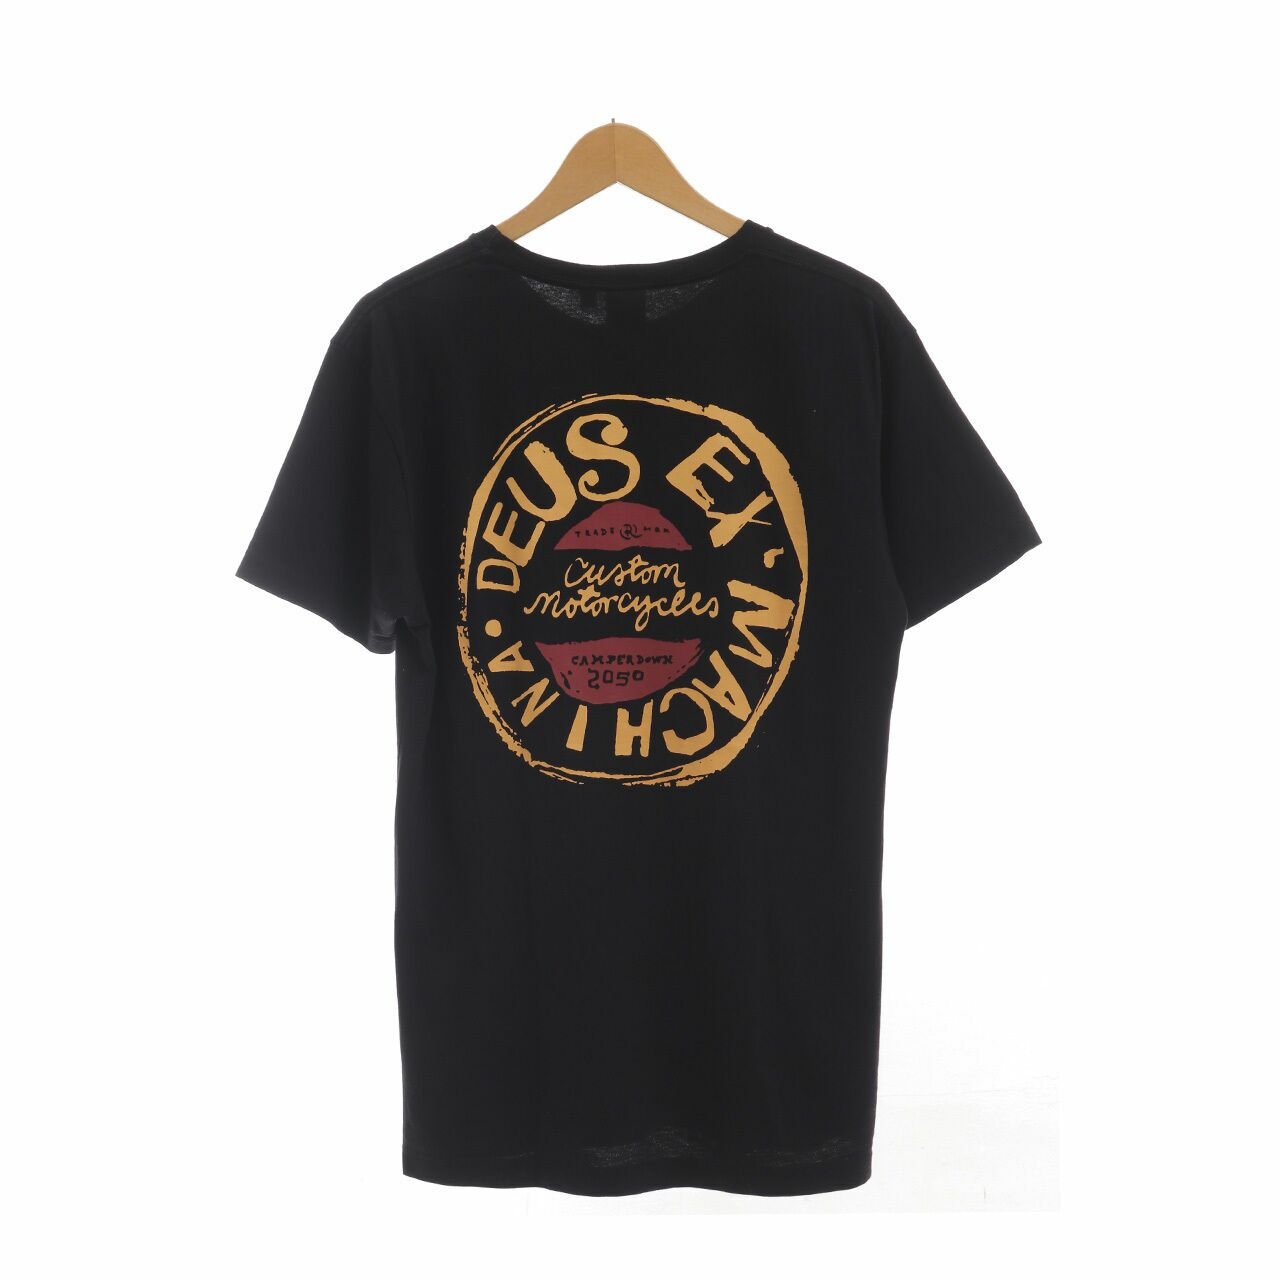 Deus Black Printed T-Shirt 